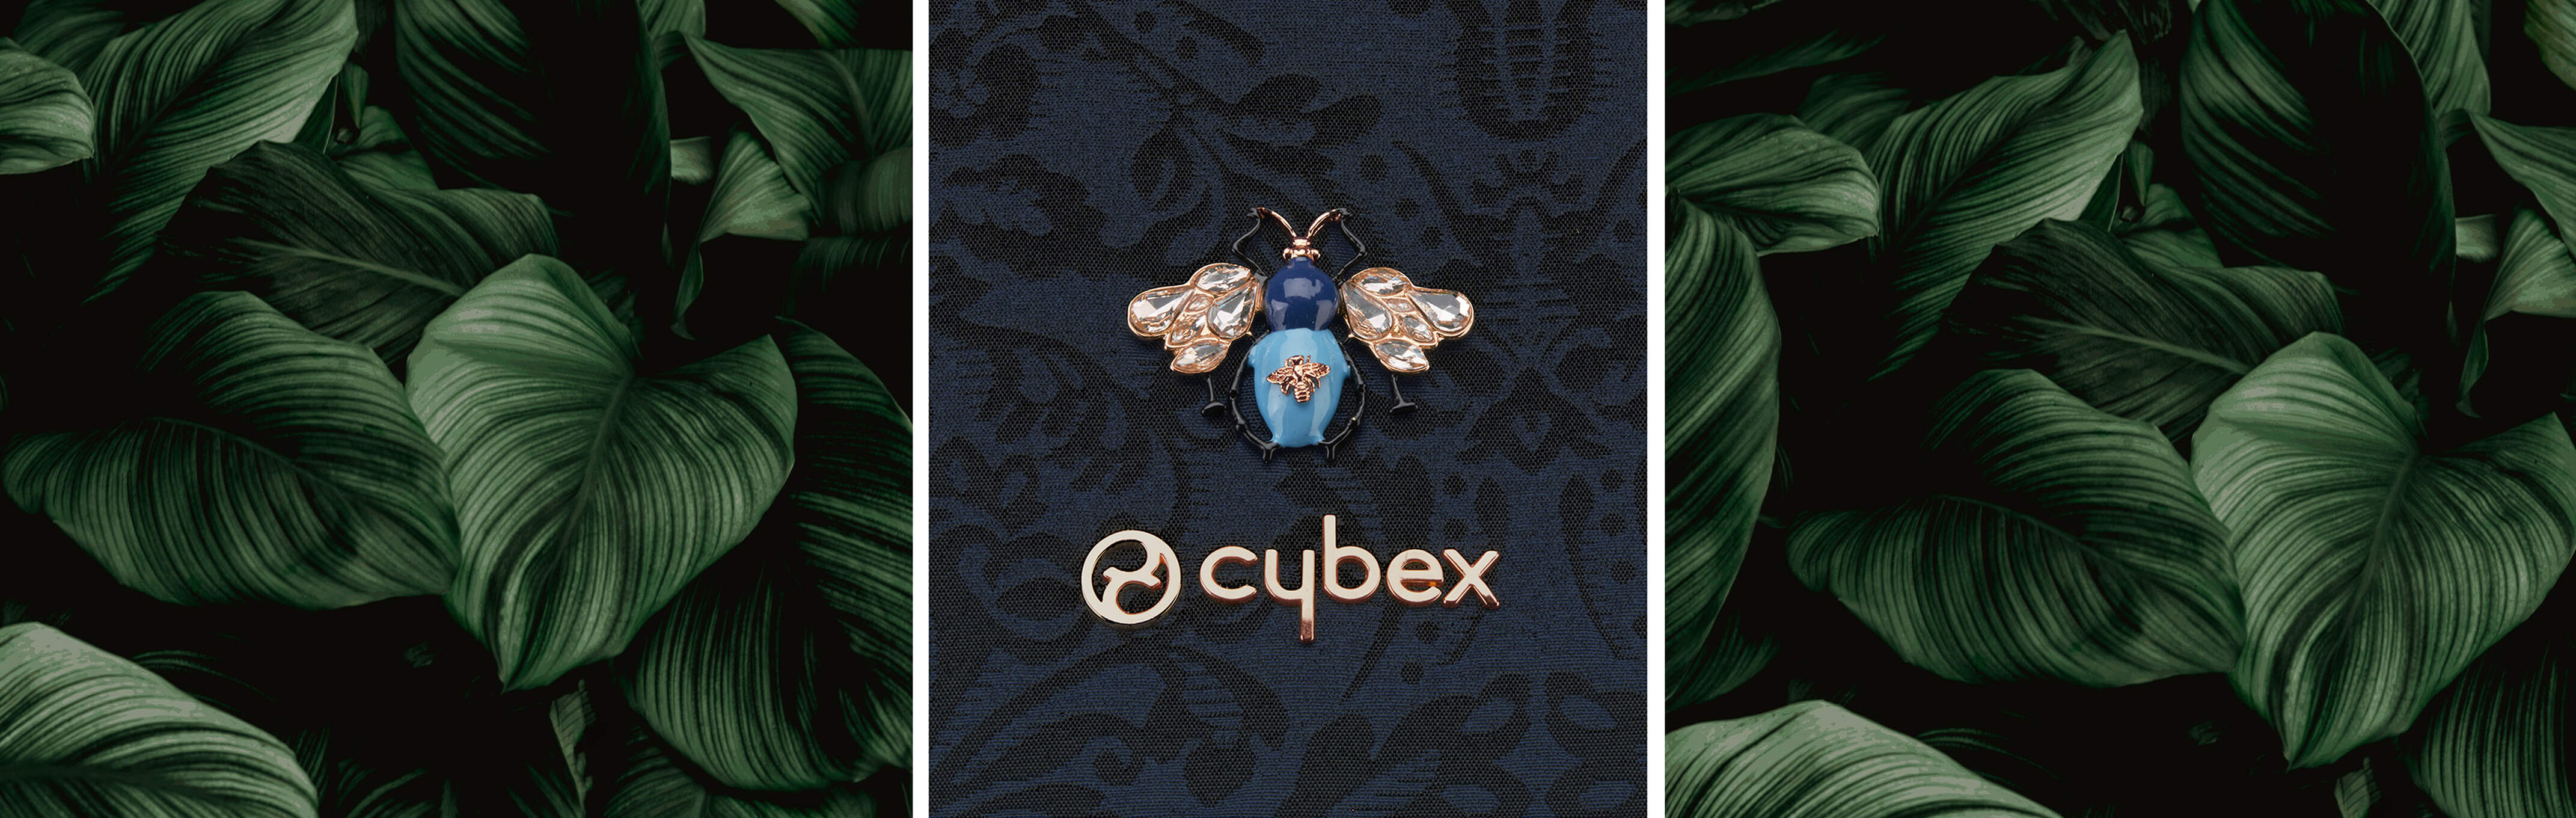 CYBEX Jewels of Nature Logo